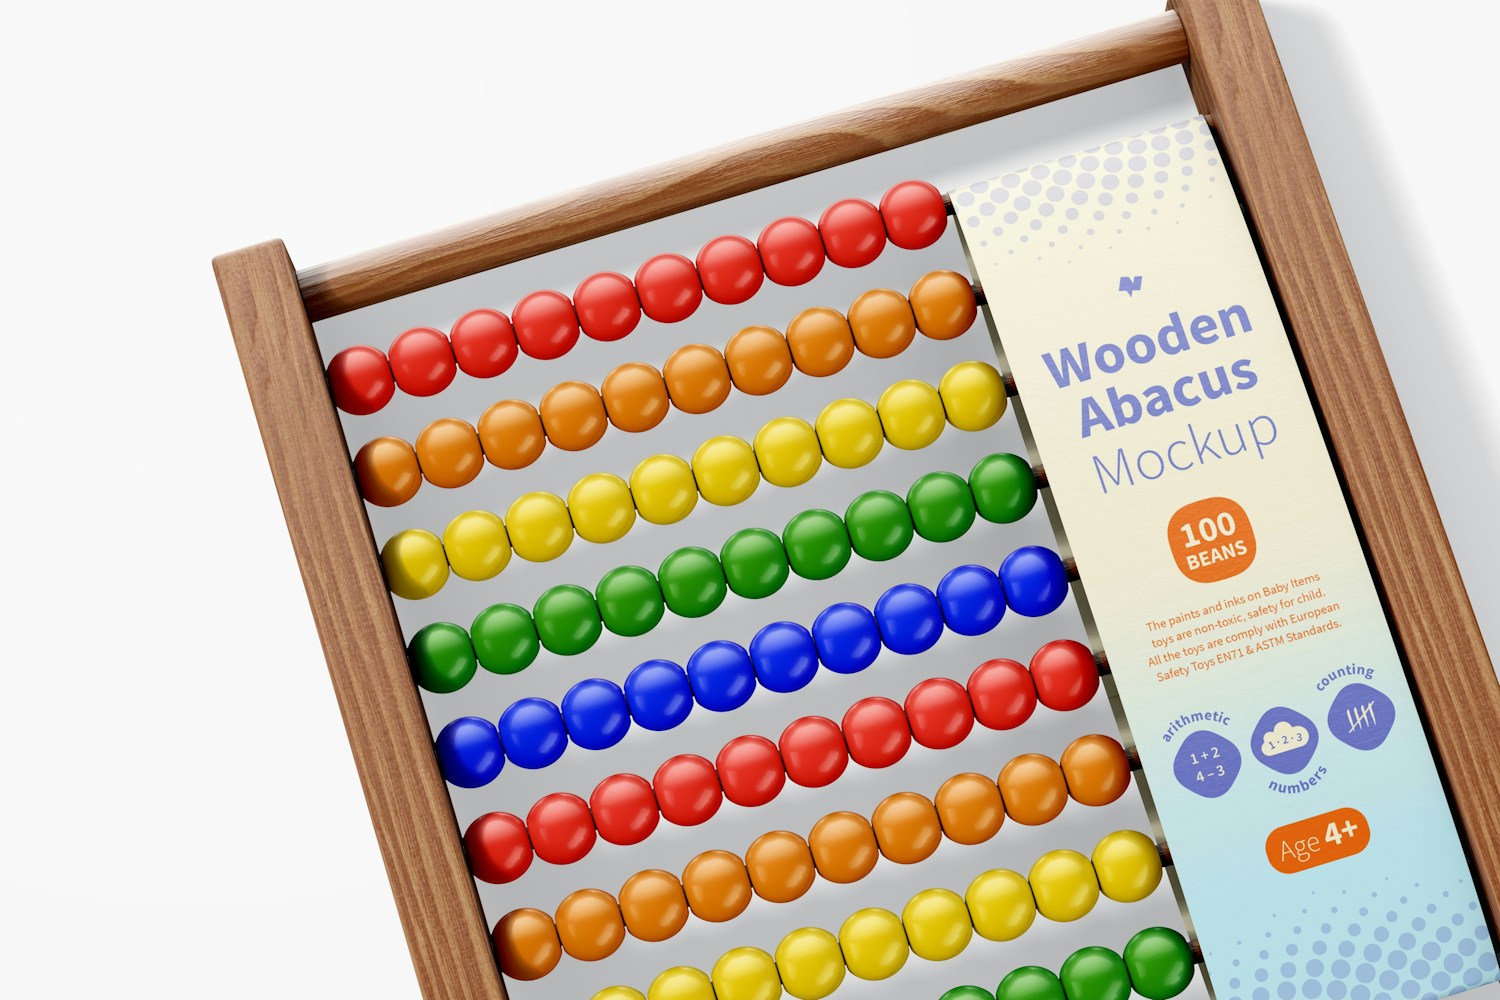 Wooden Abacus Mockup, Close-up